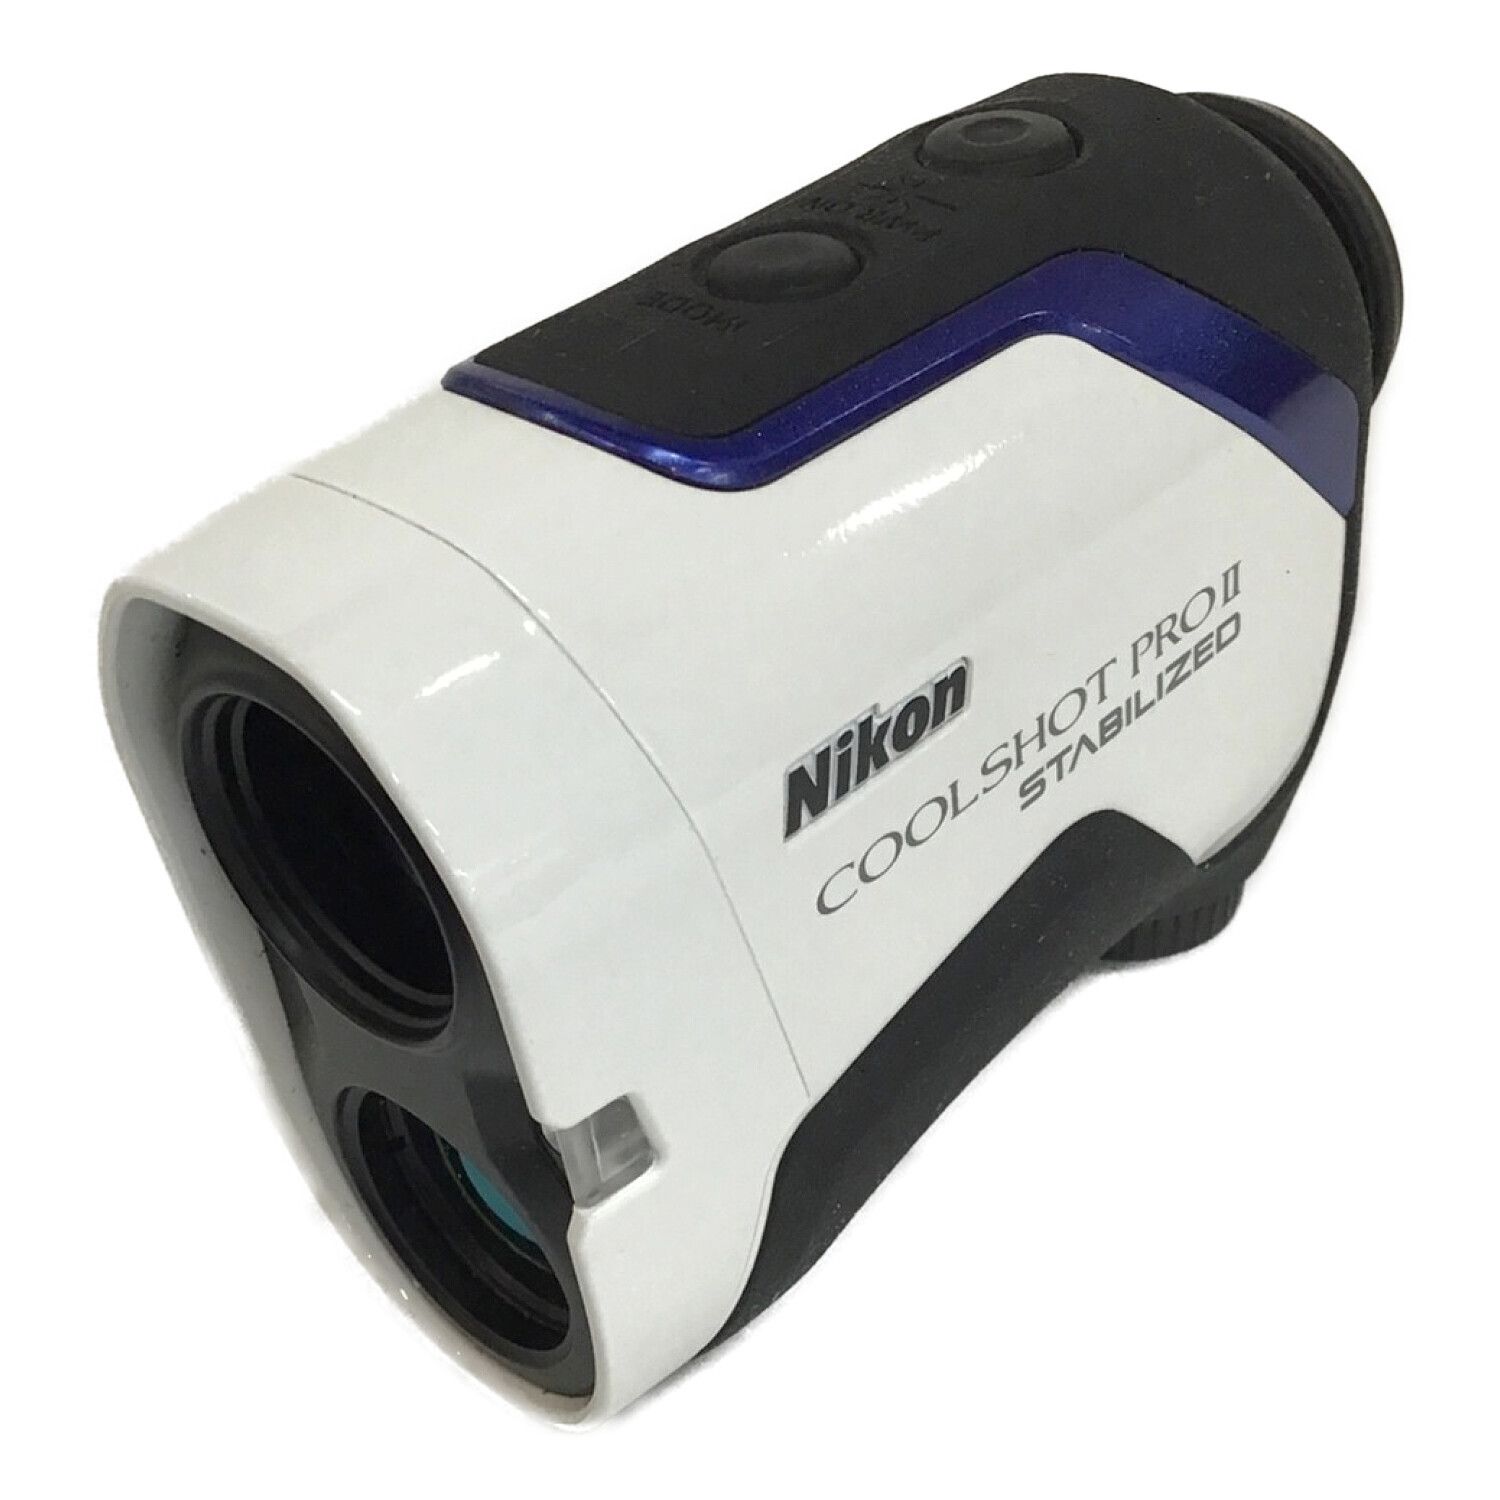 Nikon (ニコン) ゴルフ距離測定器 ホワイト ゴルフ用レーザー距離計